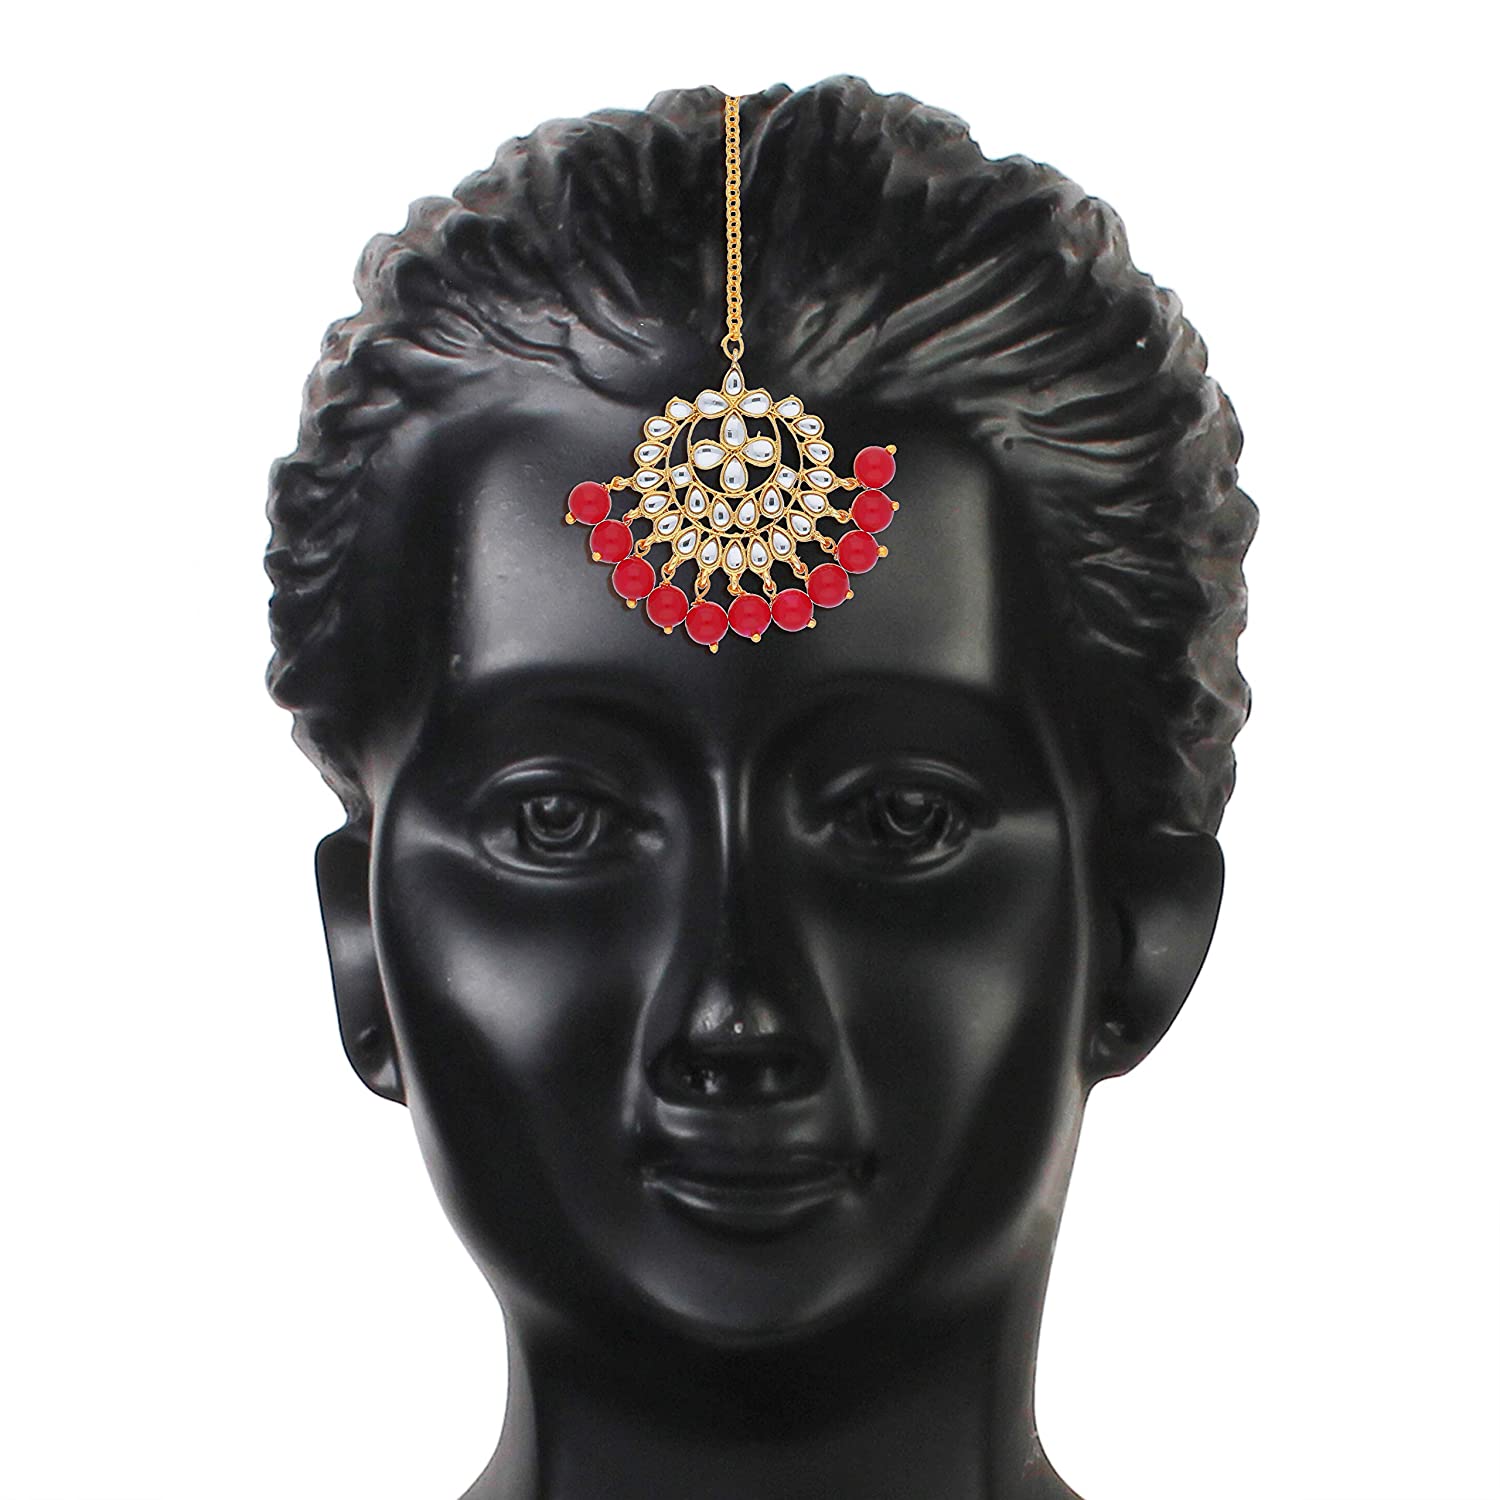 Women's Traditional Gold Plated Chandbali Kundan & Pearl Earring Set with Maang Tikka - I Jewels